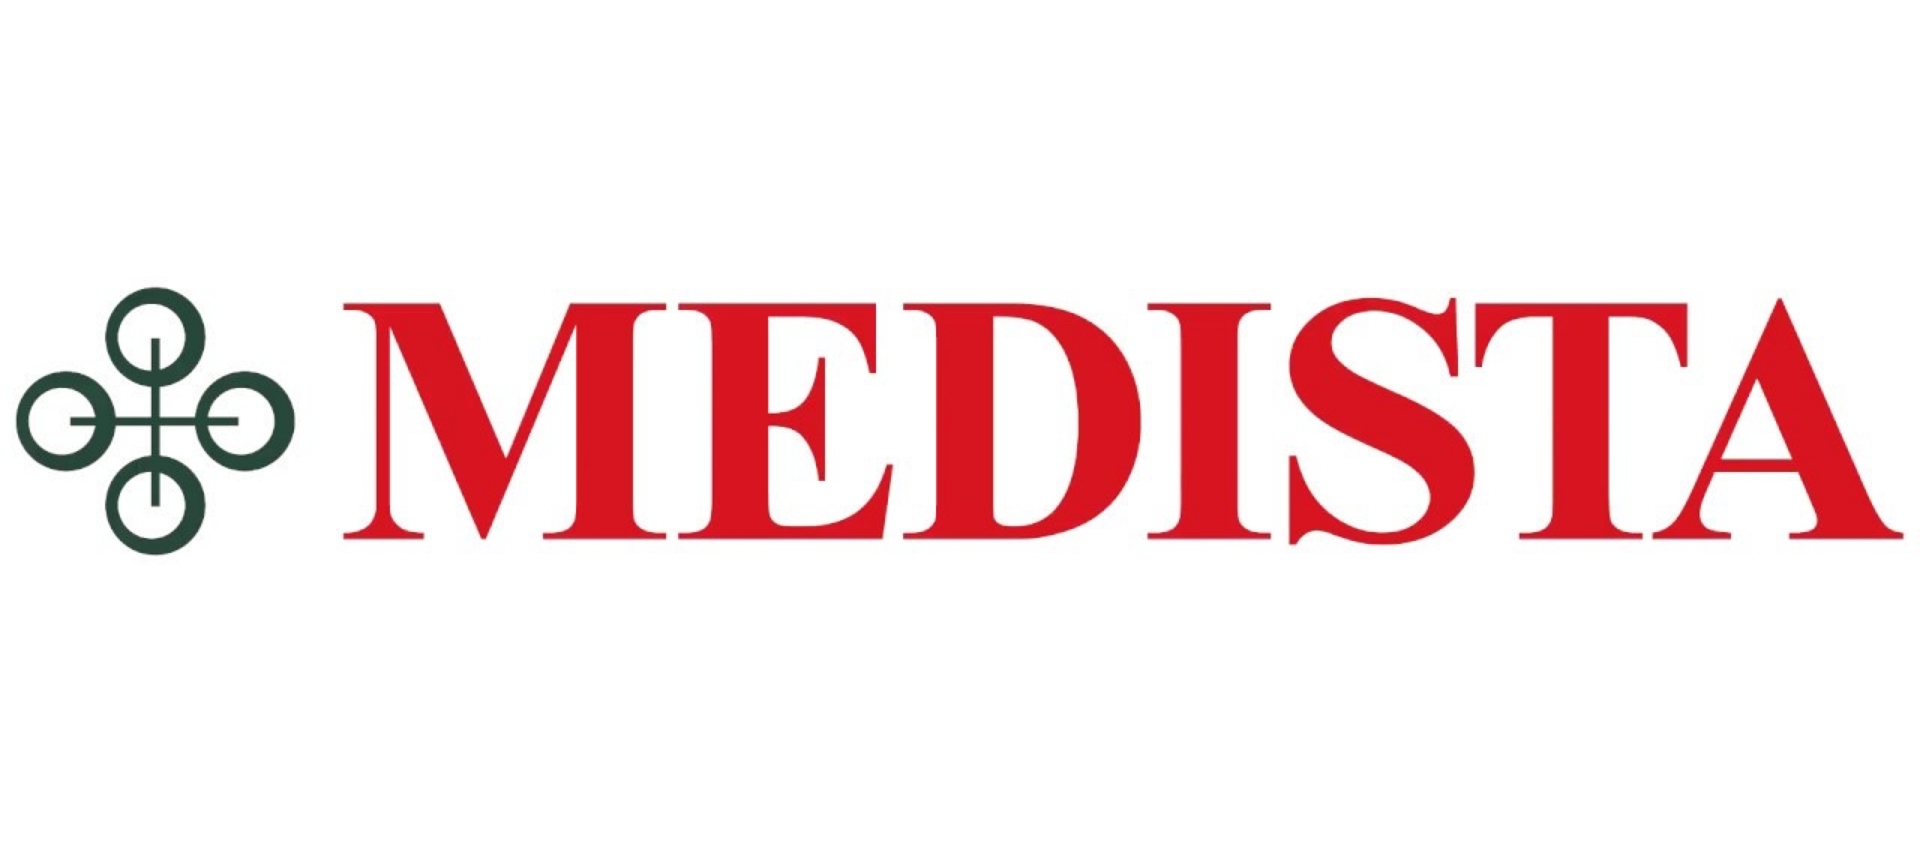 Medista and HemoClear partnership